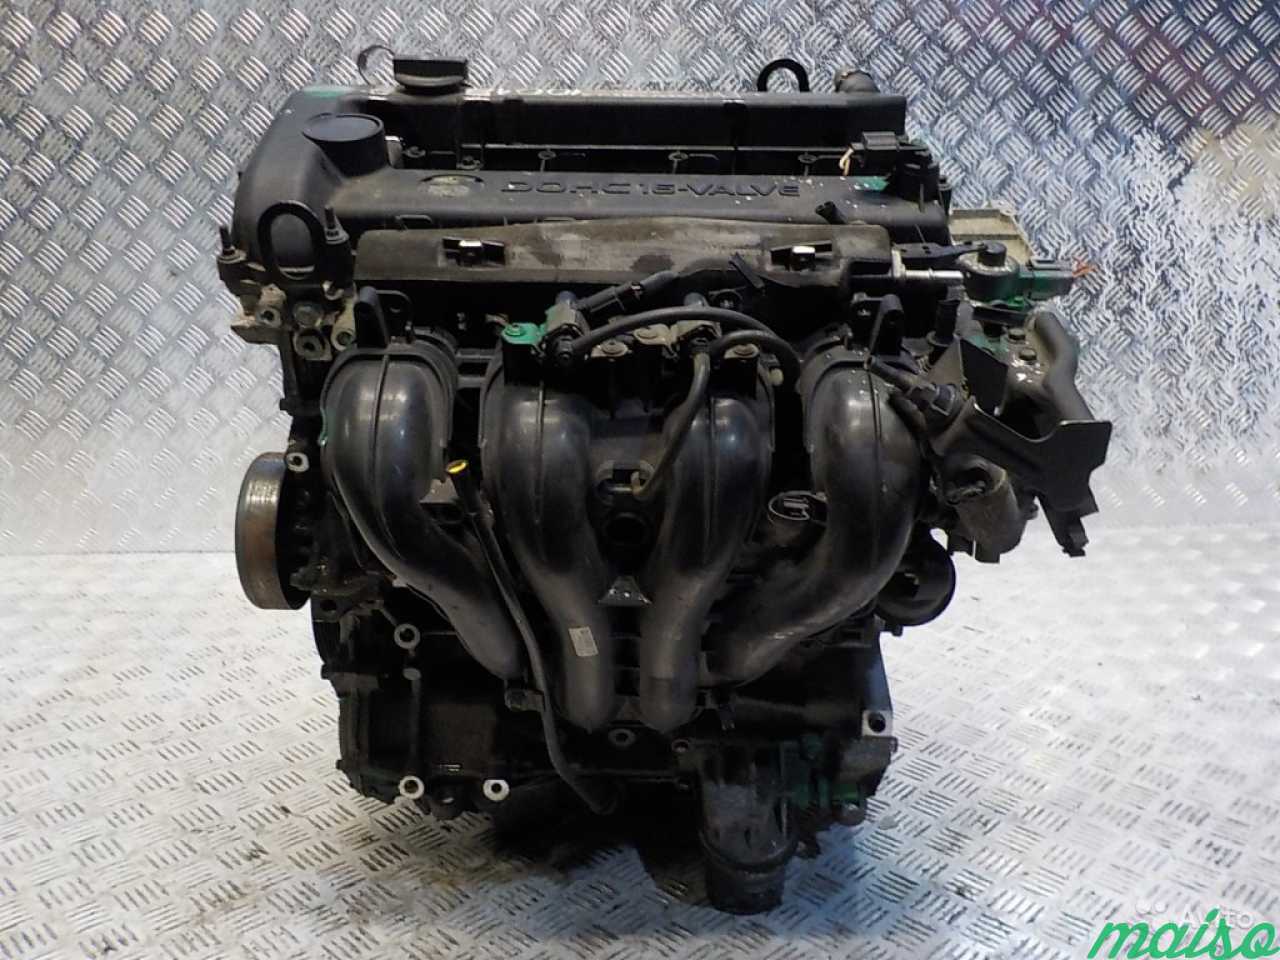 Двигатель двигатель 1 3 литра. Двигатель l3 Mazda. Двигатель Мазда l3 2.3. Мазда трибьют 2.3 двигатель. Мазда трибьют двигатель l3.